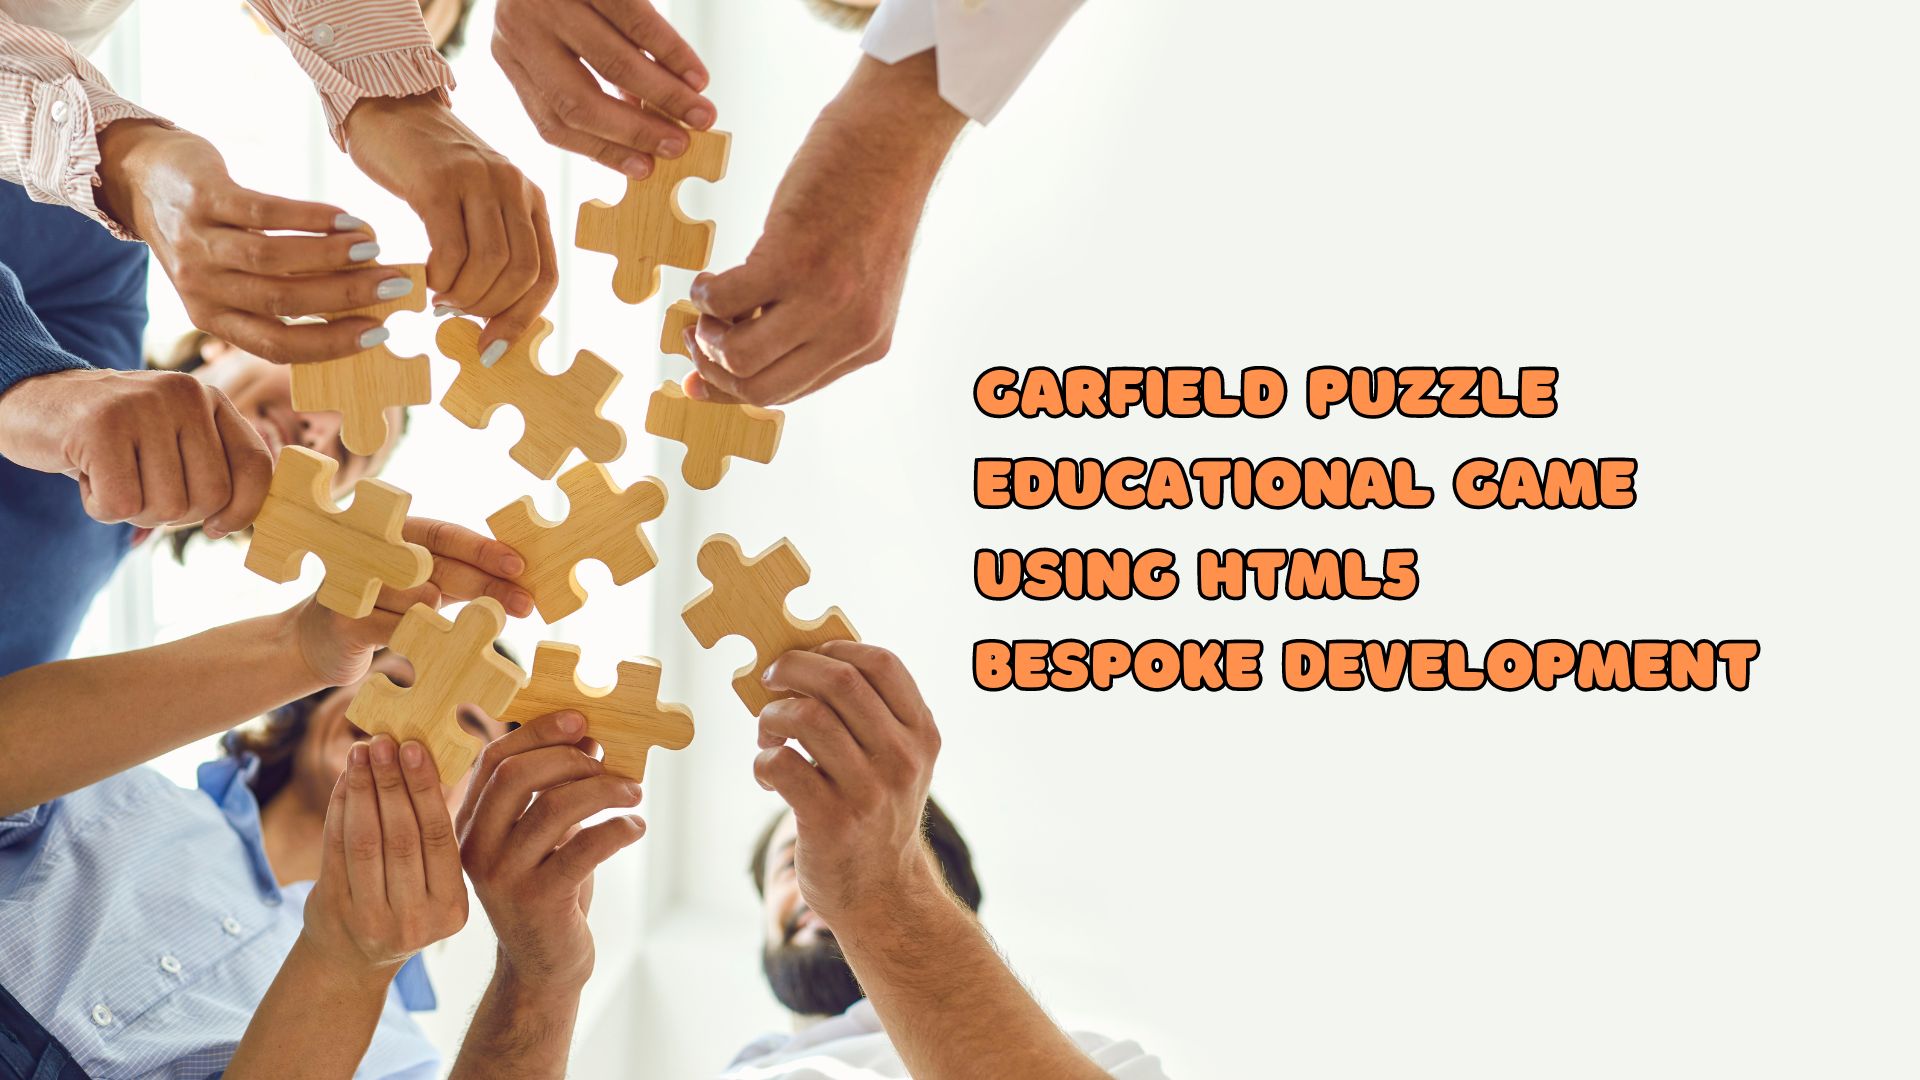 Garfield Puzzle: Educational Game Using HTML5 Bespoke Development